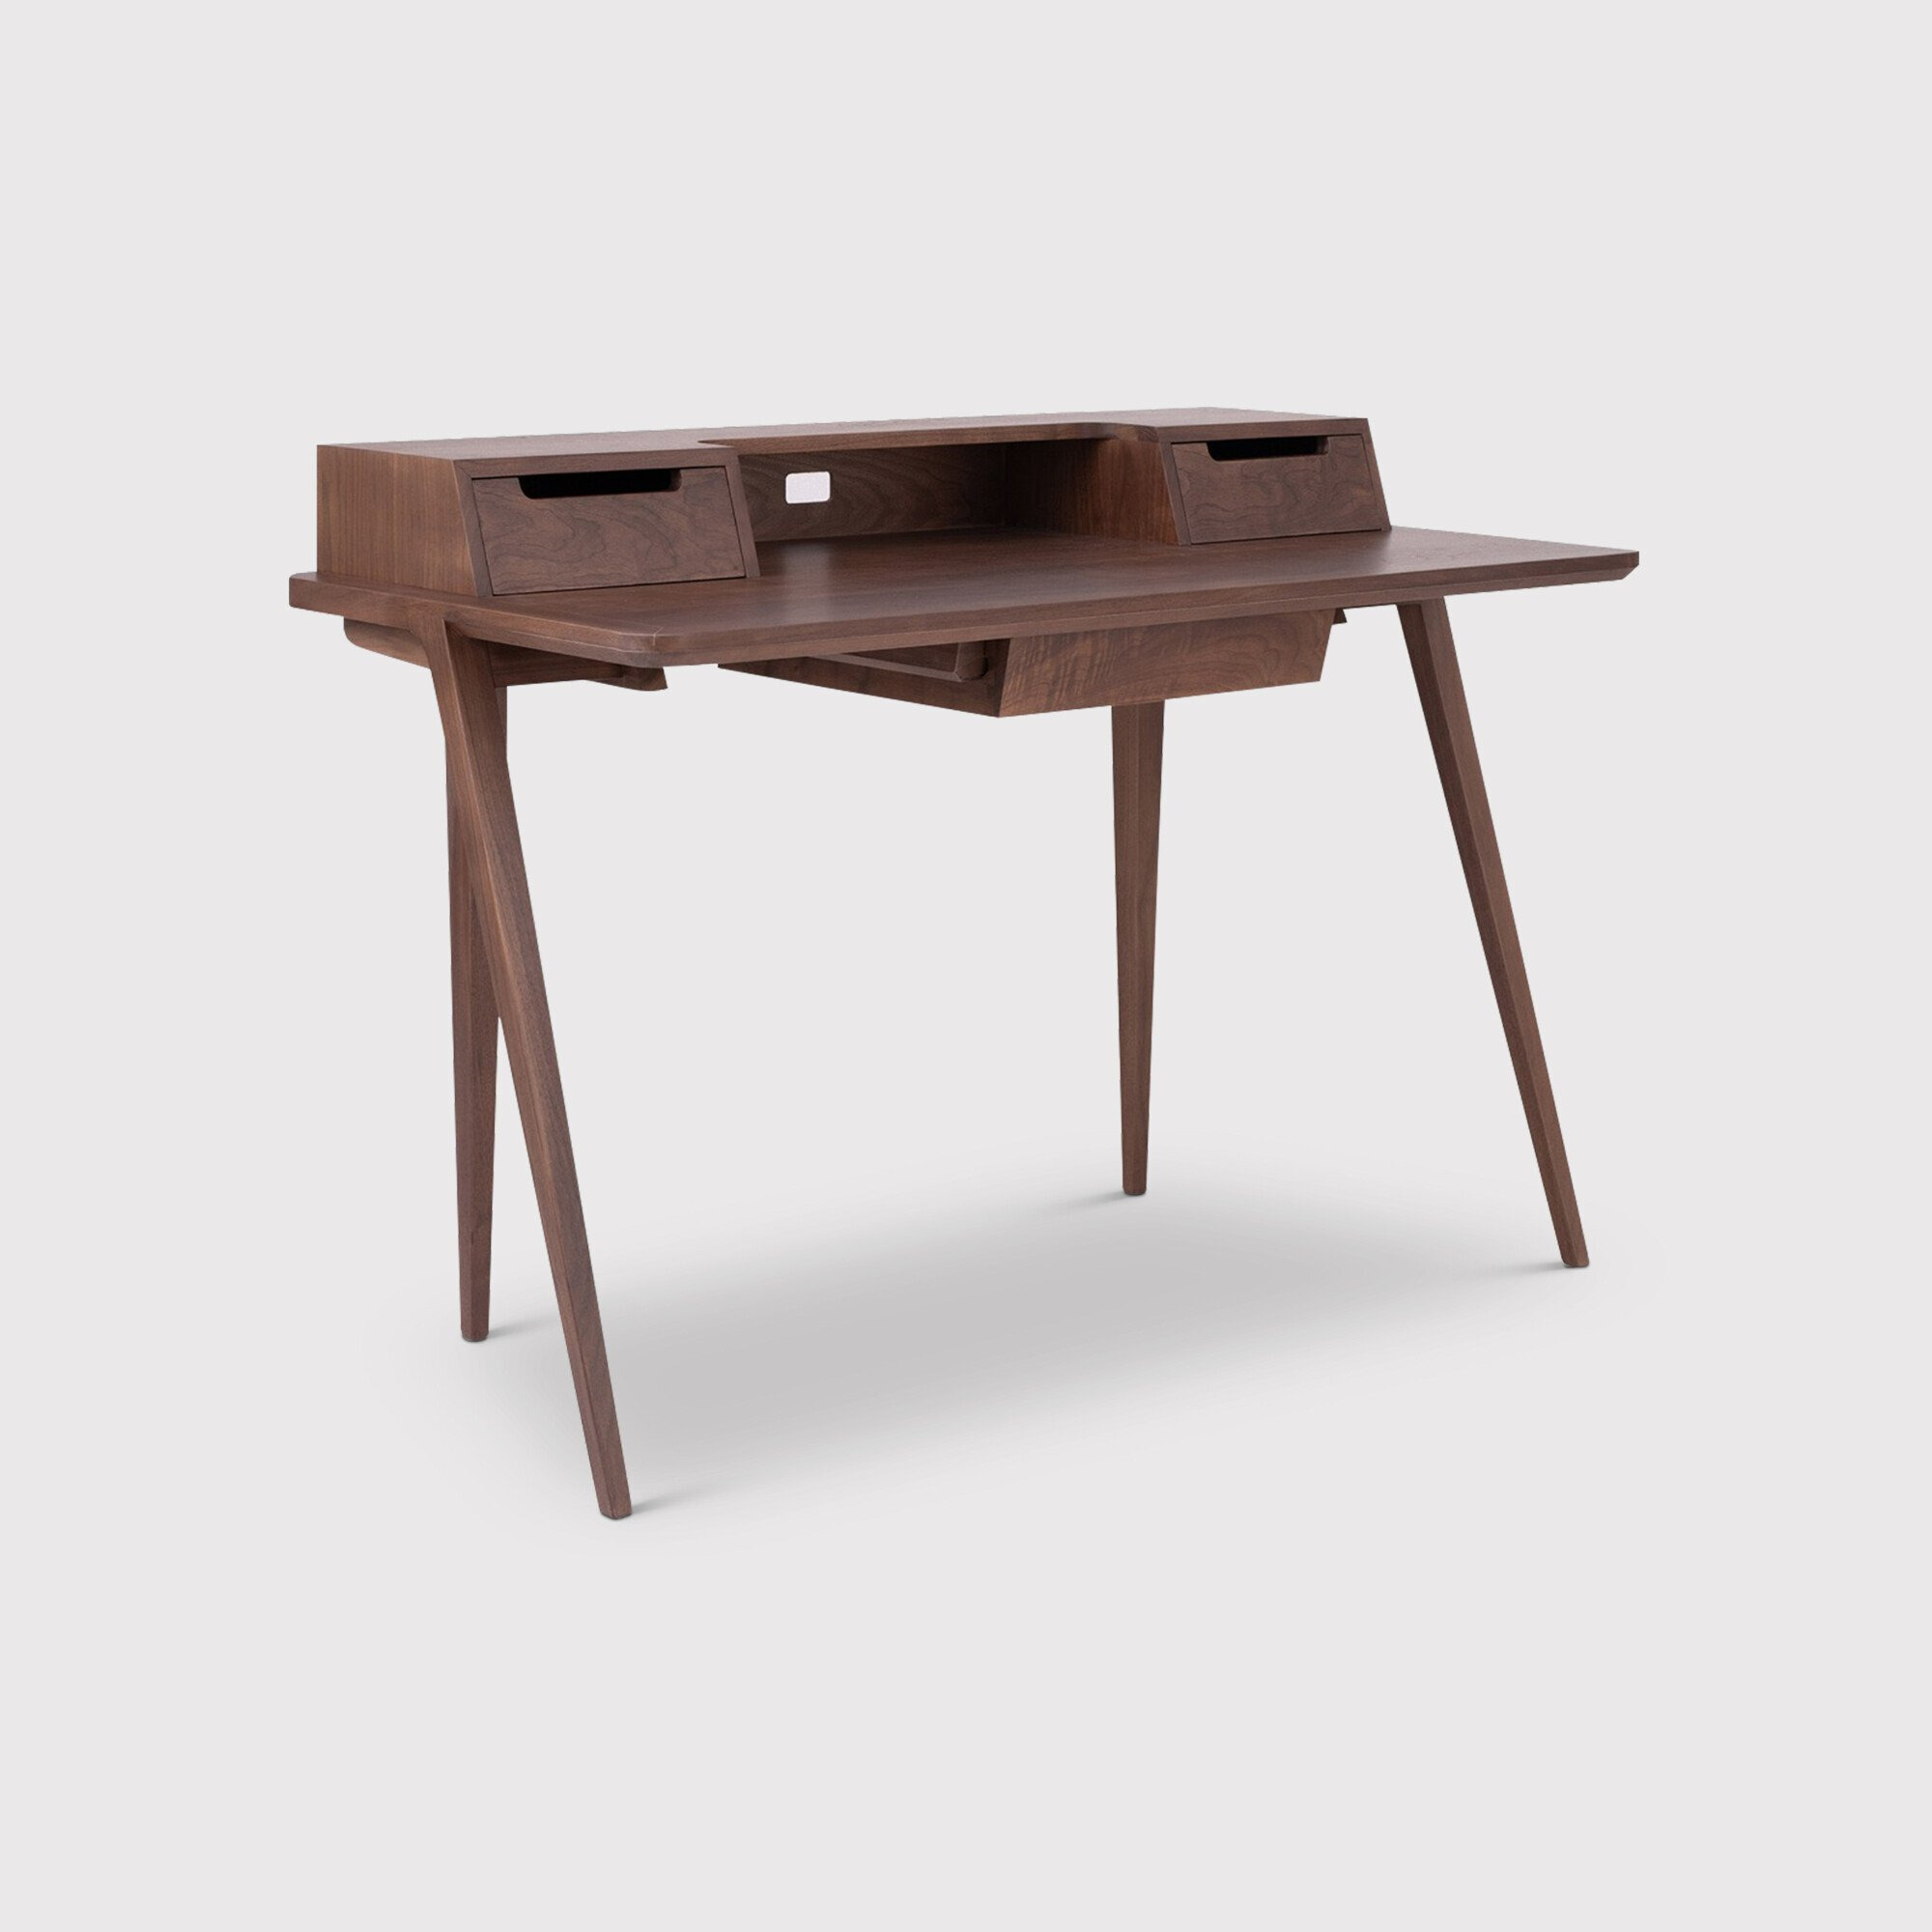 L.Ercolani Treviso Desk, Neutral Wood - Barker & Stonehouse - image 1